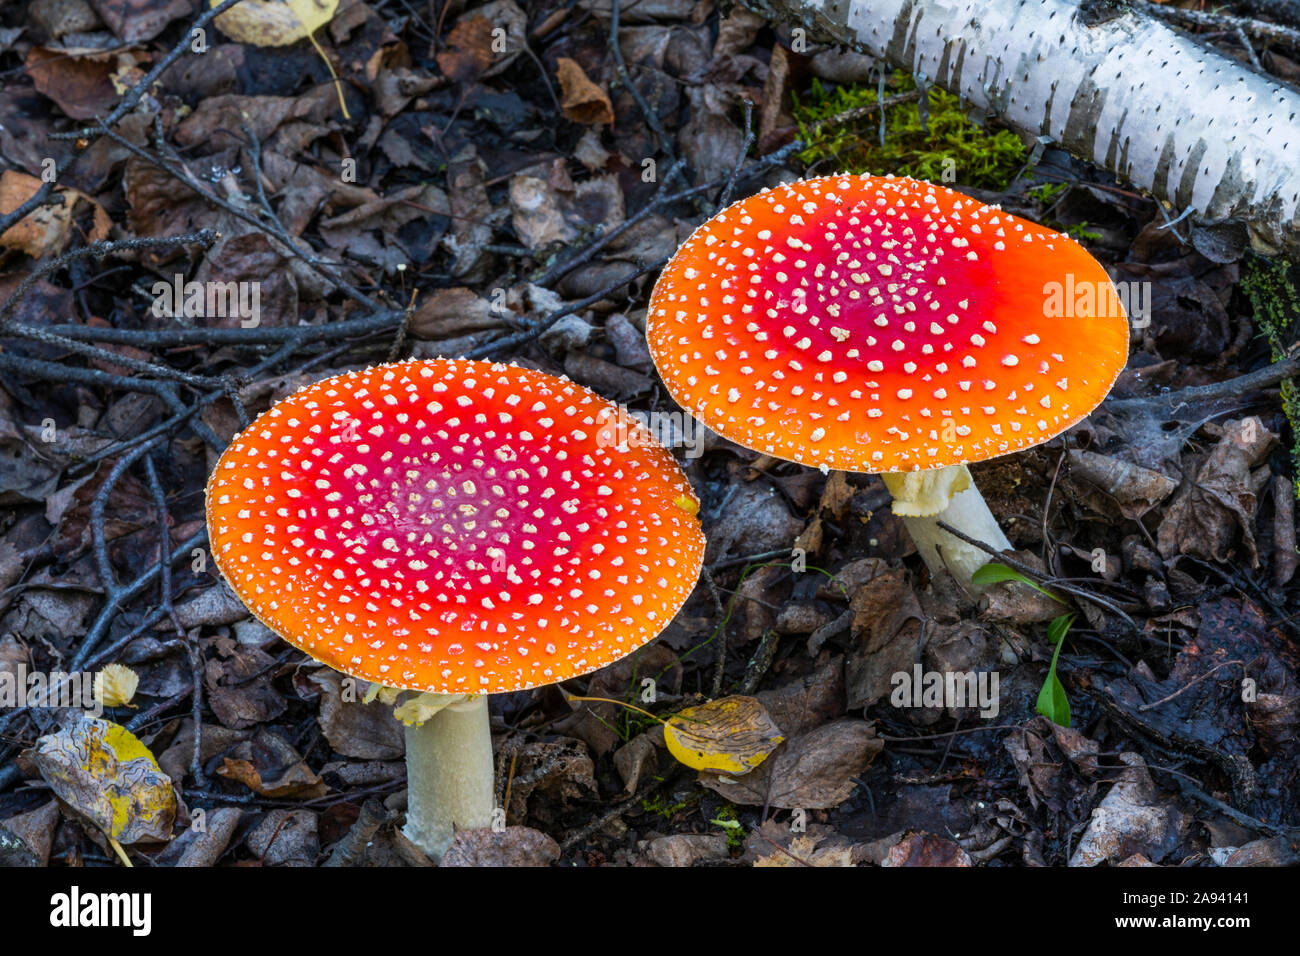 Vibrant fly agaric mushrooms (amanita muscaria) grow among detritus; Alaska, United States of America Stock Photo